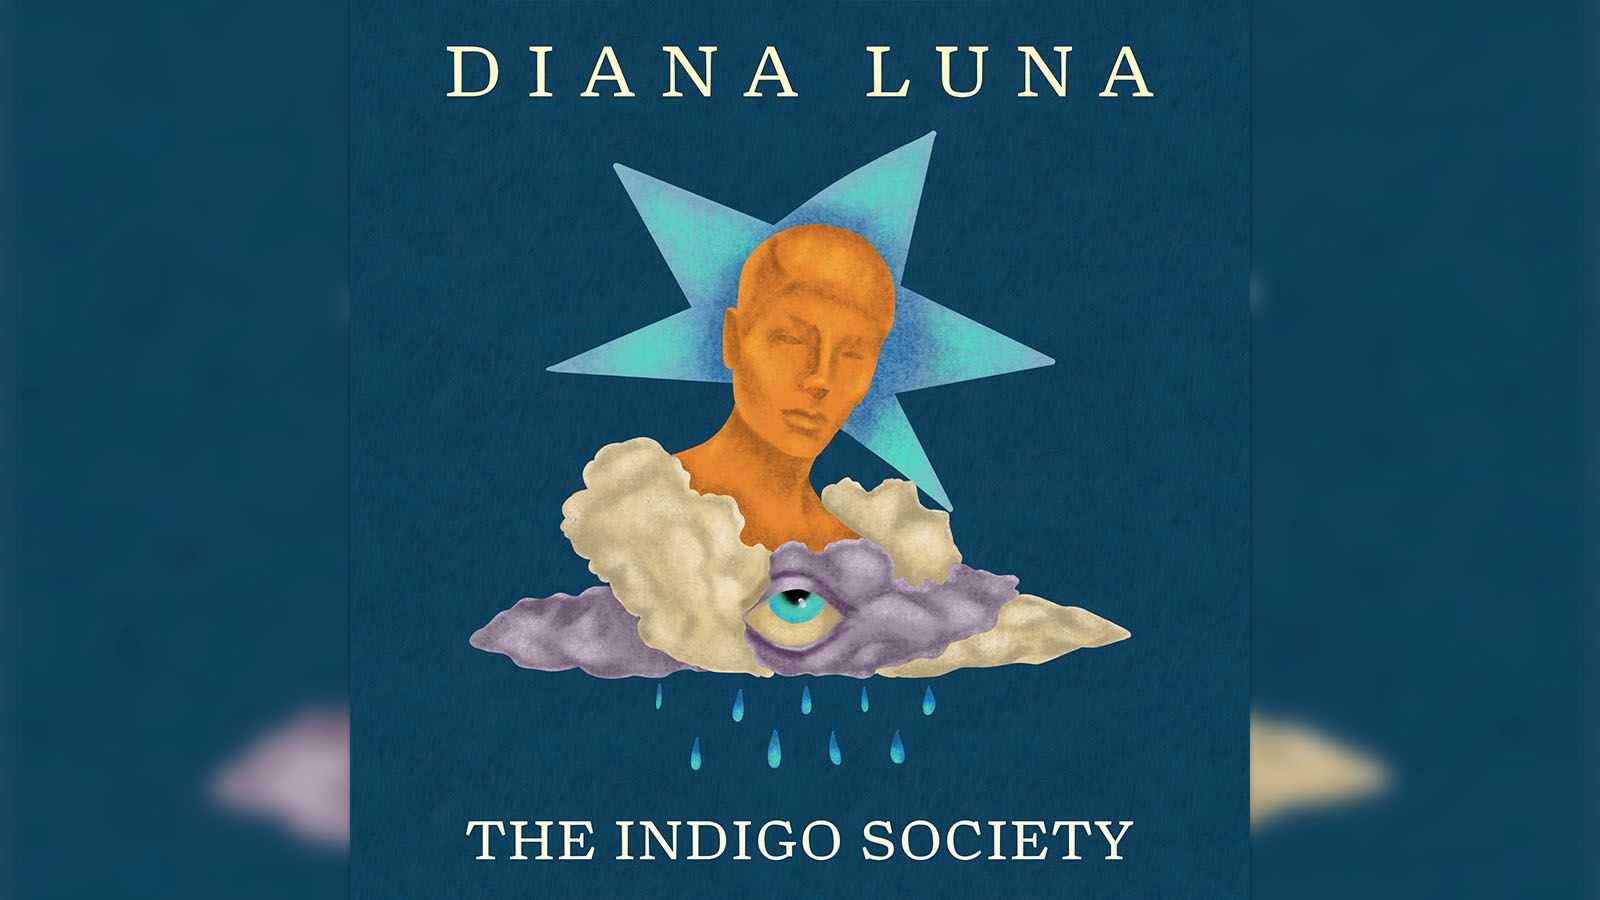 The Indigo Society released Diana Luna on Sept. 15.